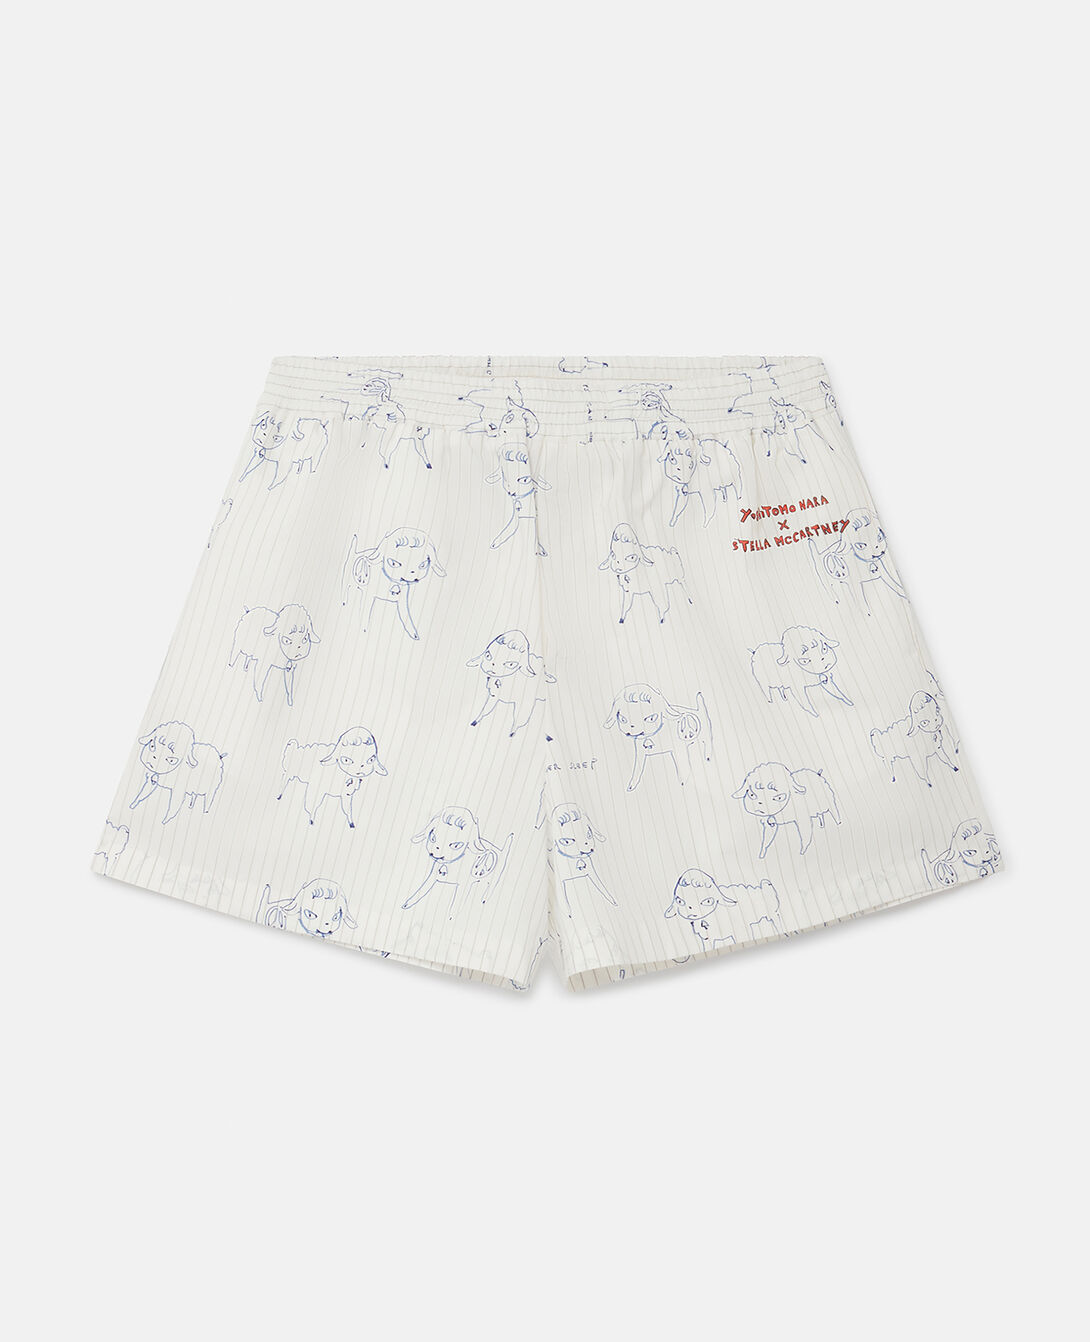 Patterned shorts - Multicolour print